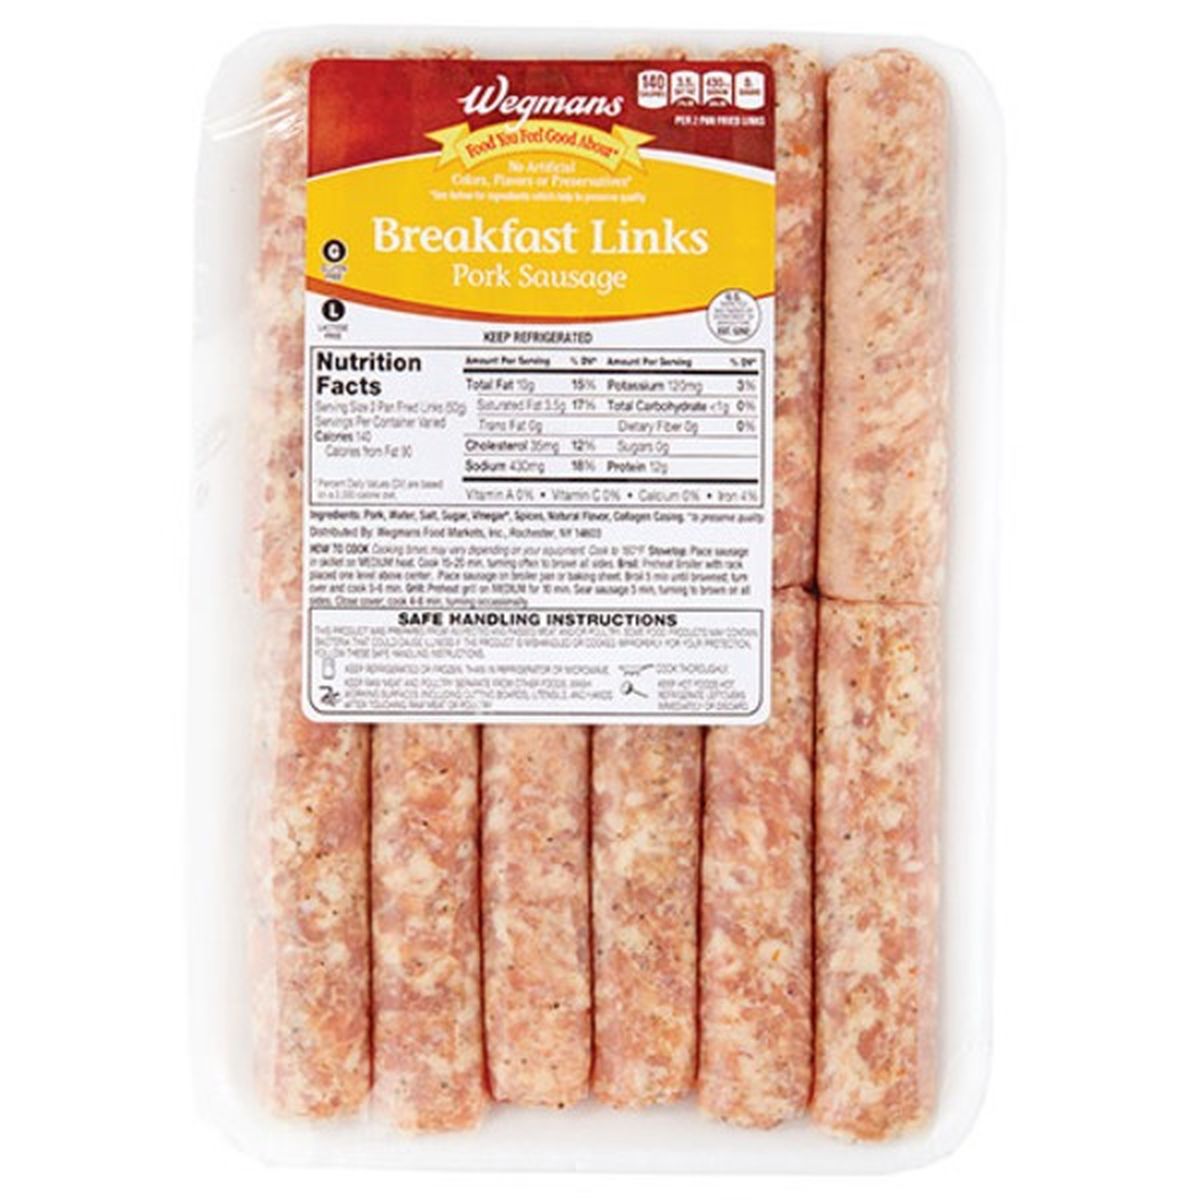 Calories in Wegmans Breakfast Links Pork Sausage